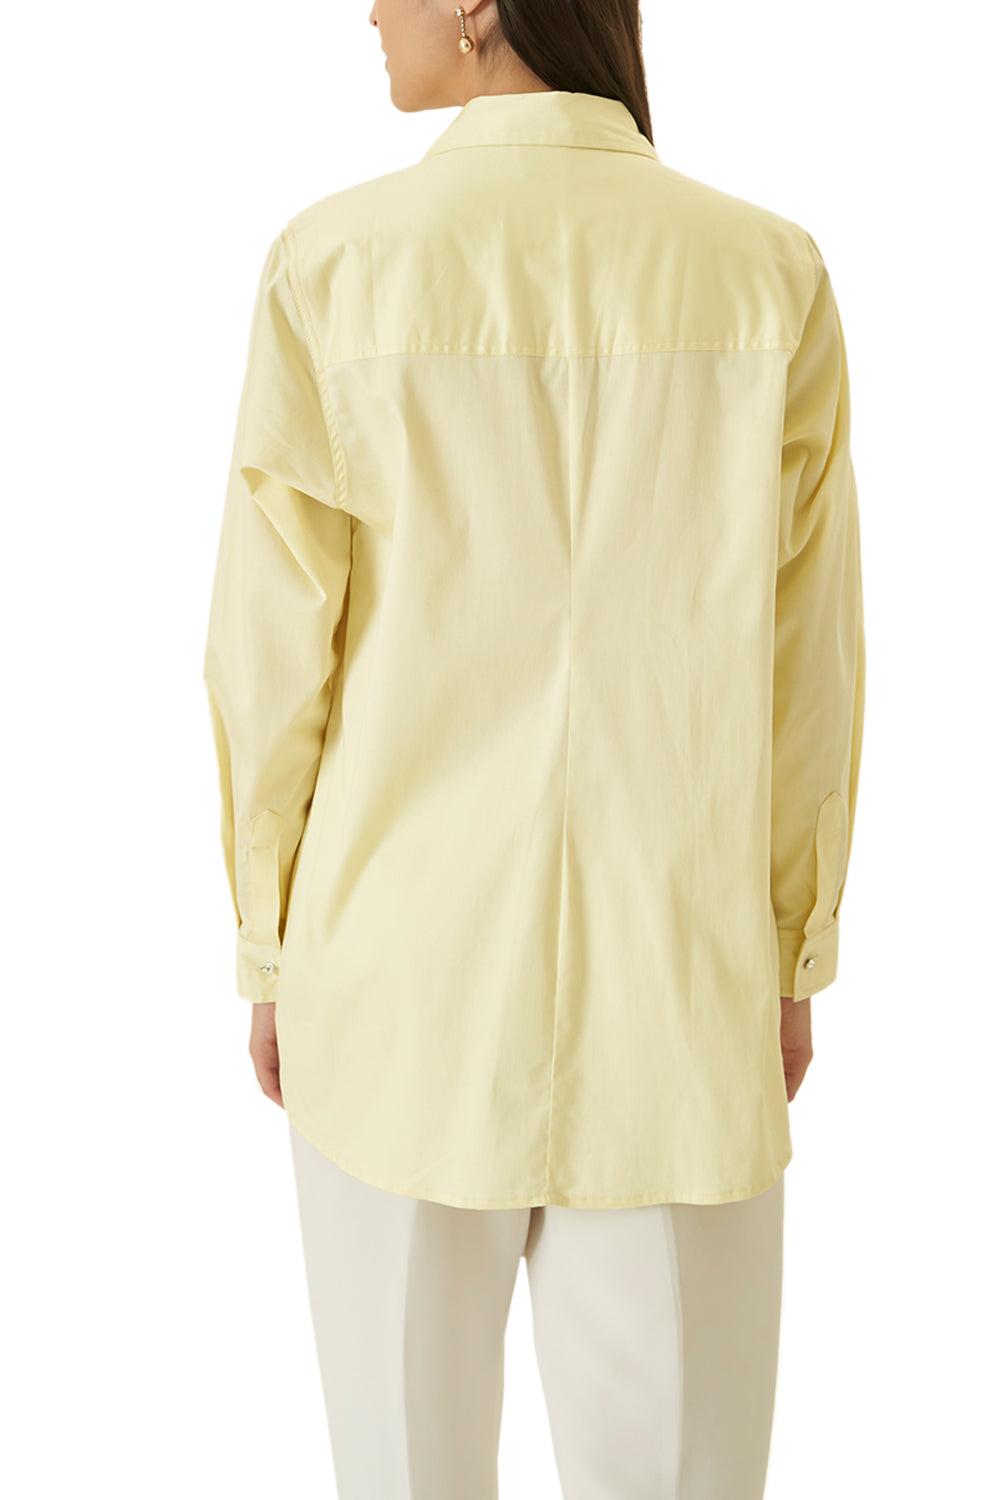 Lemon Yellow Shirt With Bead Work